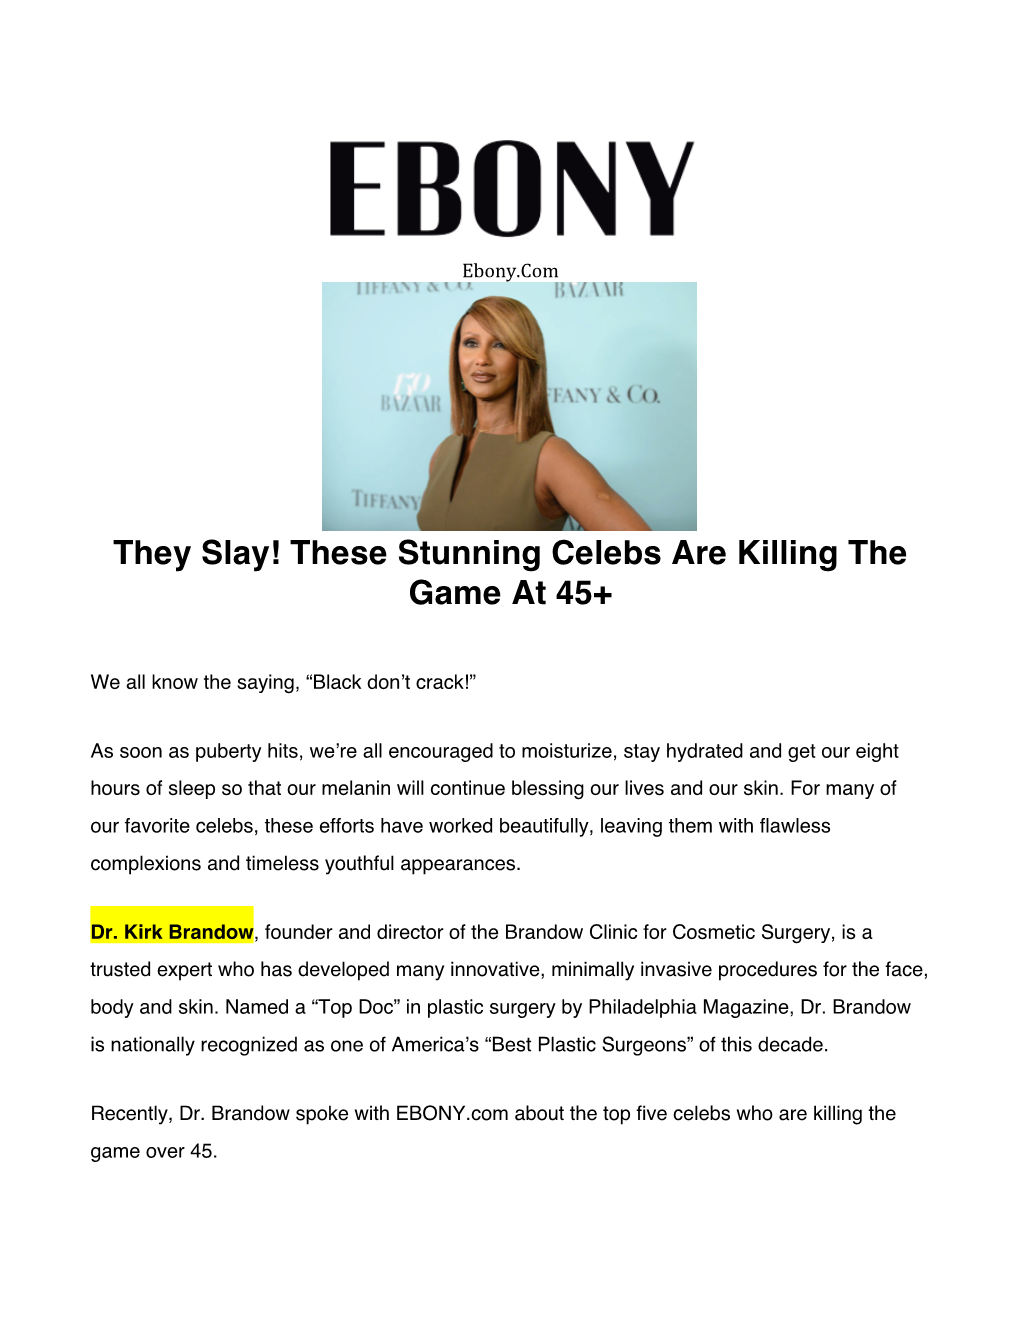 Ebony.Com – July 31, 2017 Dr. Brandow Gives His